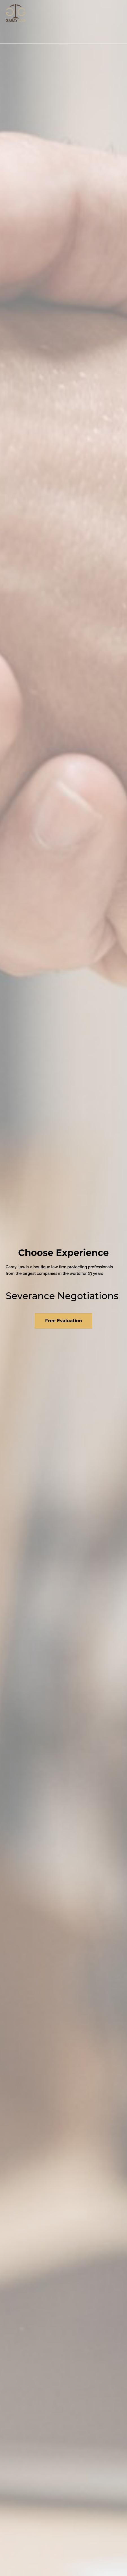 Garay Law - East Palo Alto CA Lawyers